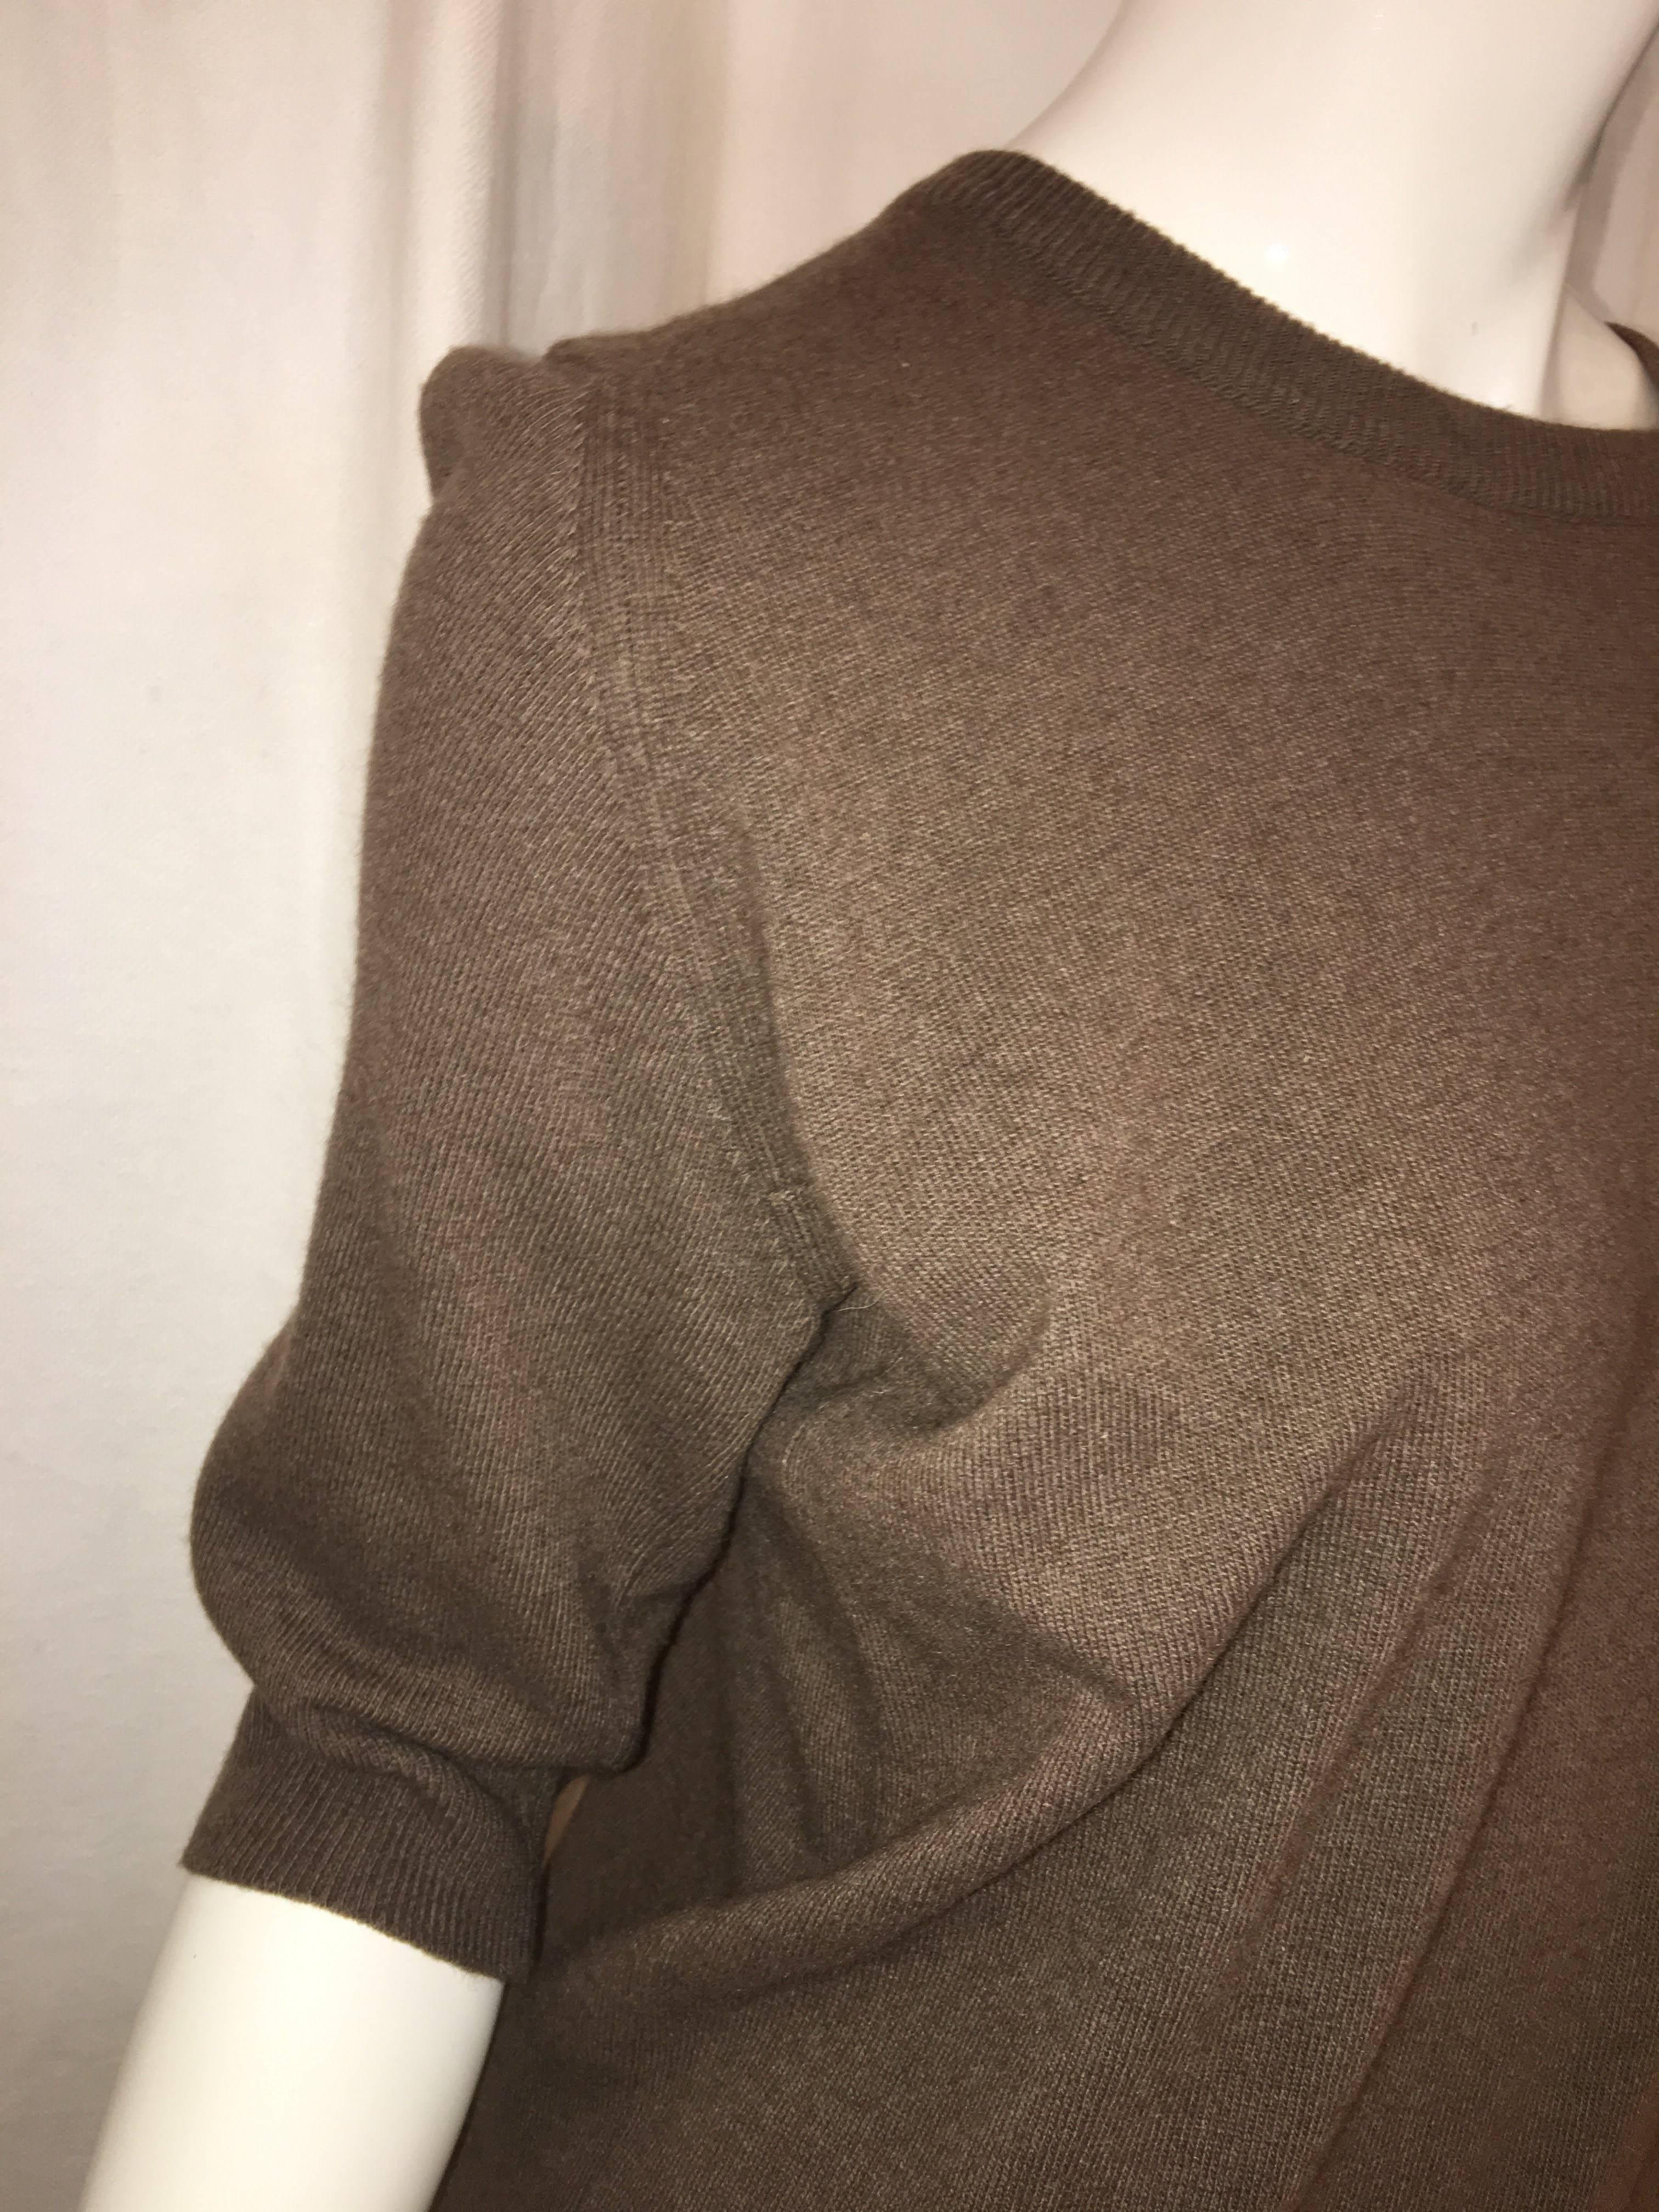 Black Chanel Cashmere Sweater